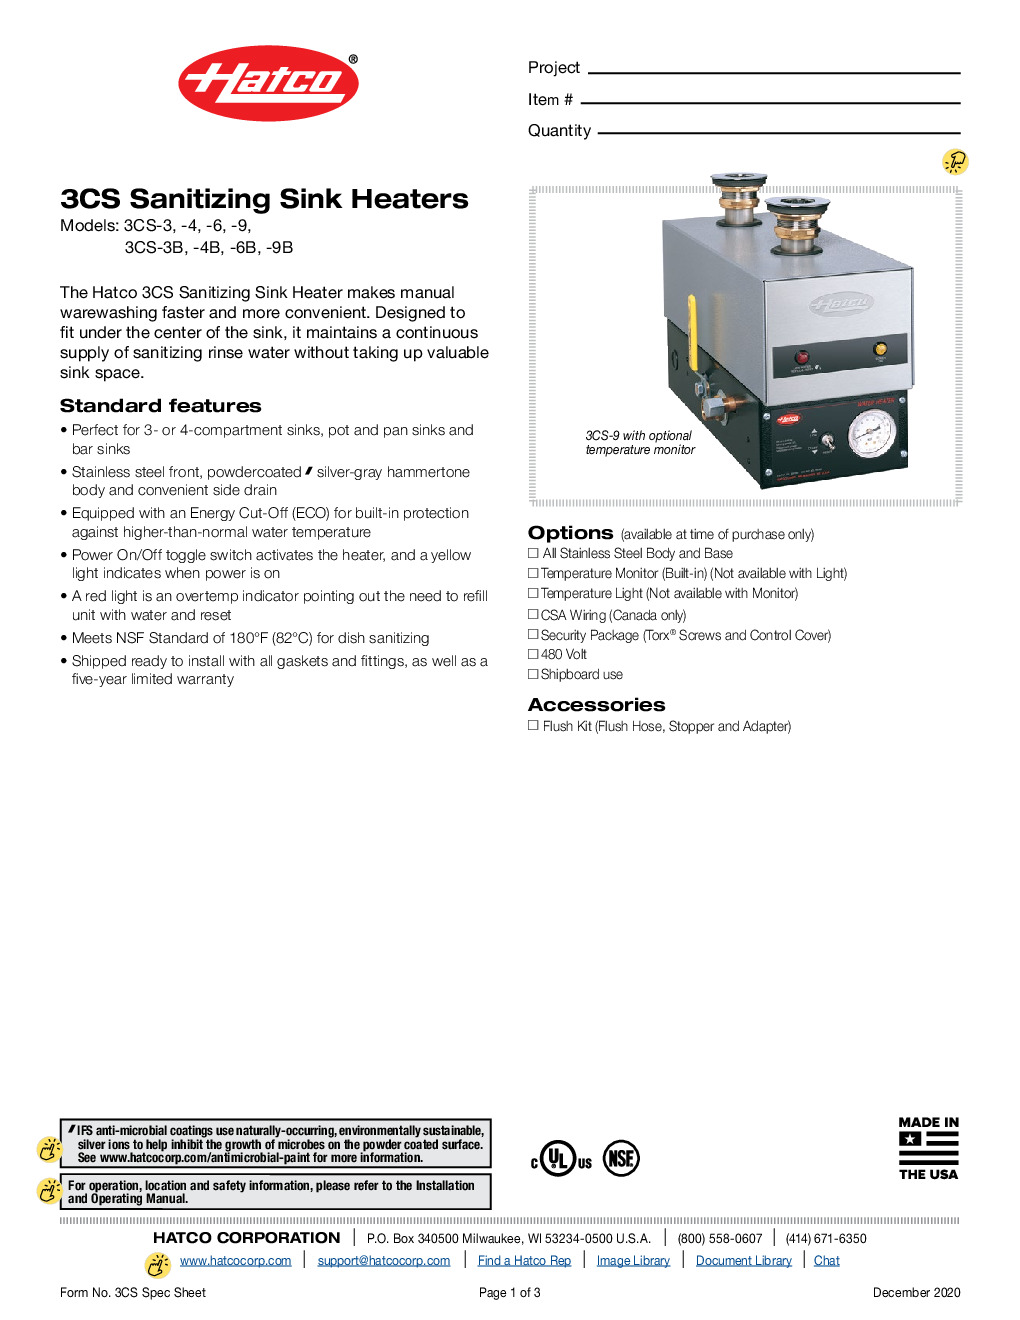 Hatco 3CS-9-QS Electric Sink Heater, 9.0 kW